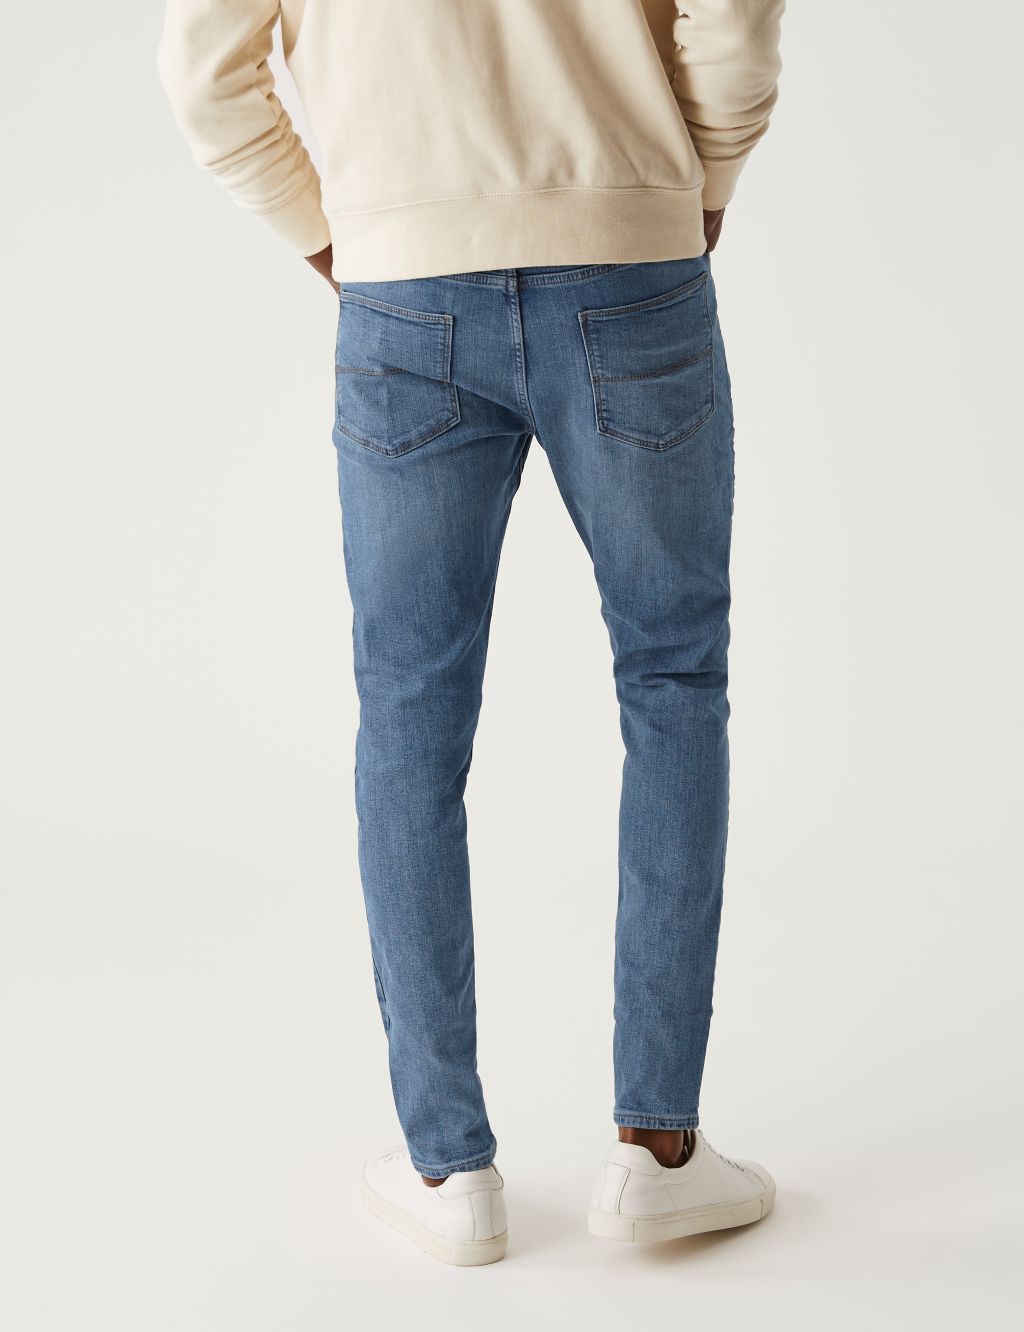 Men's Skinny Fit Jeans | M&S